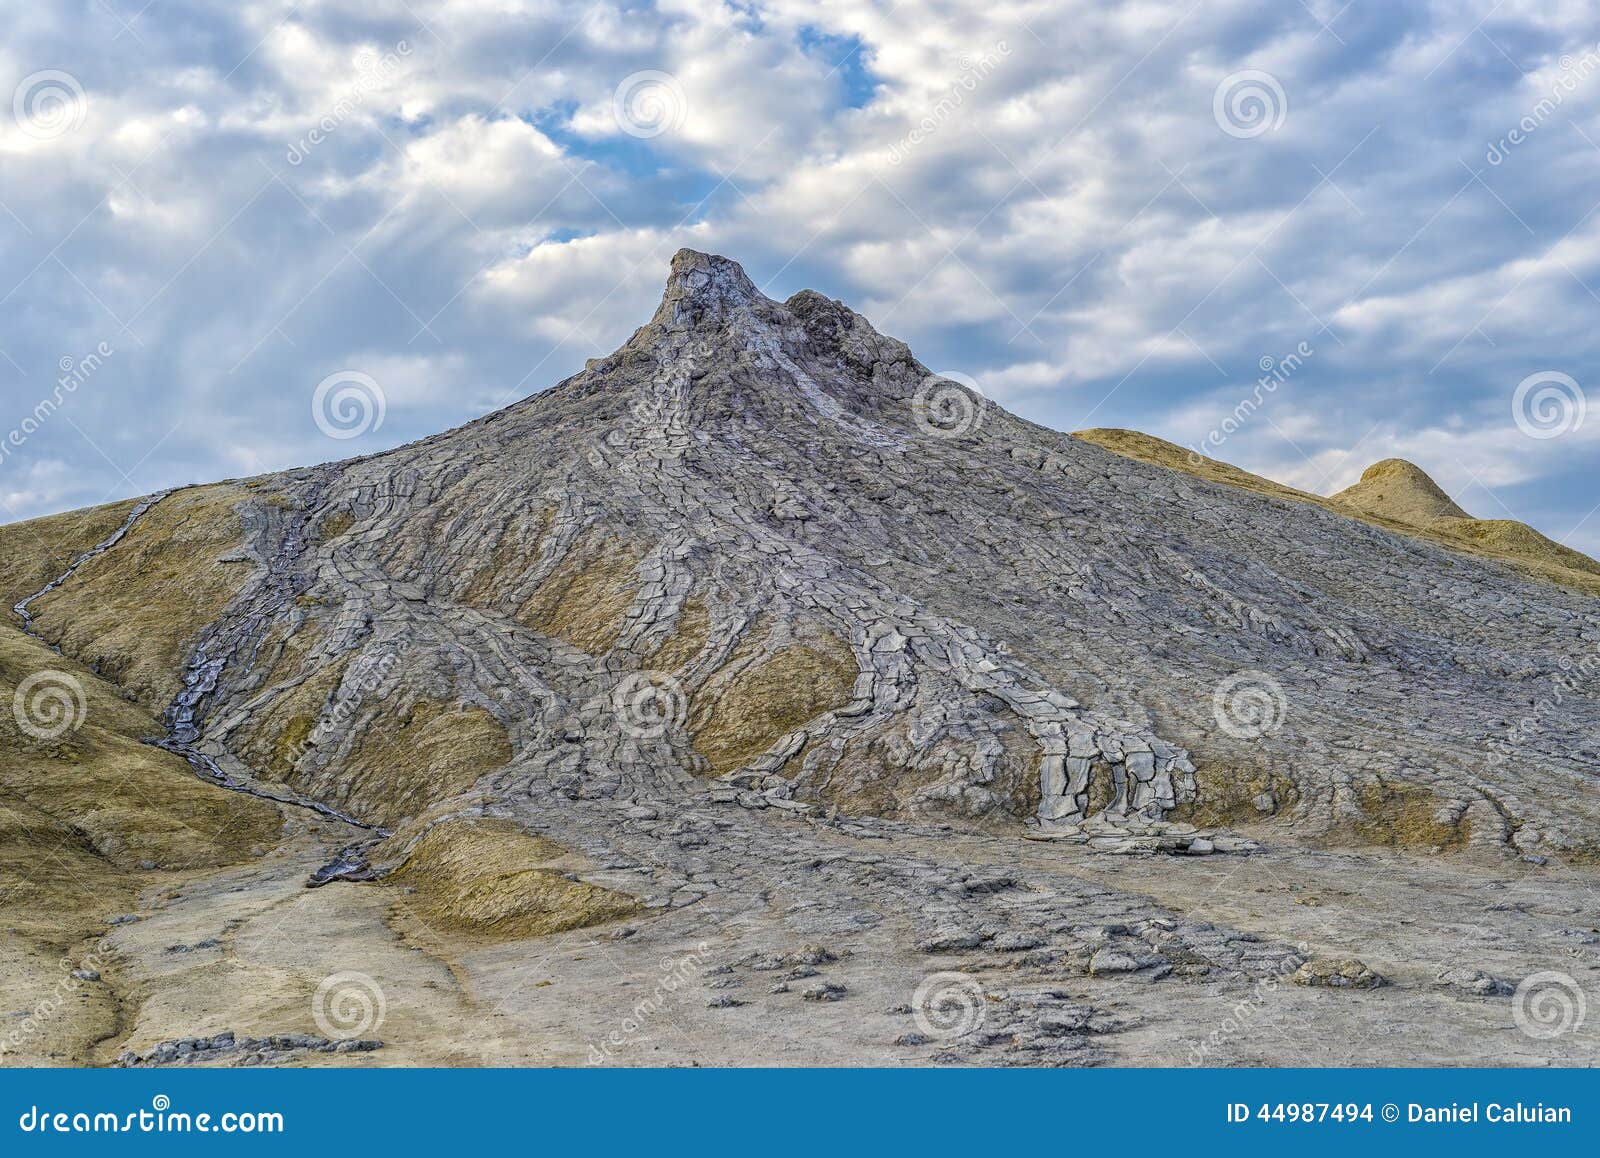 Mud volcano in Romania. Mud volcanoe in Buzau County, Romania